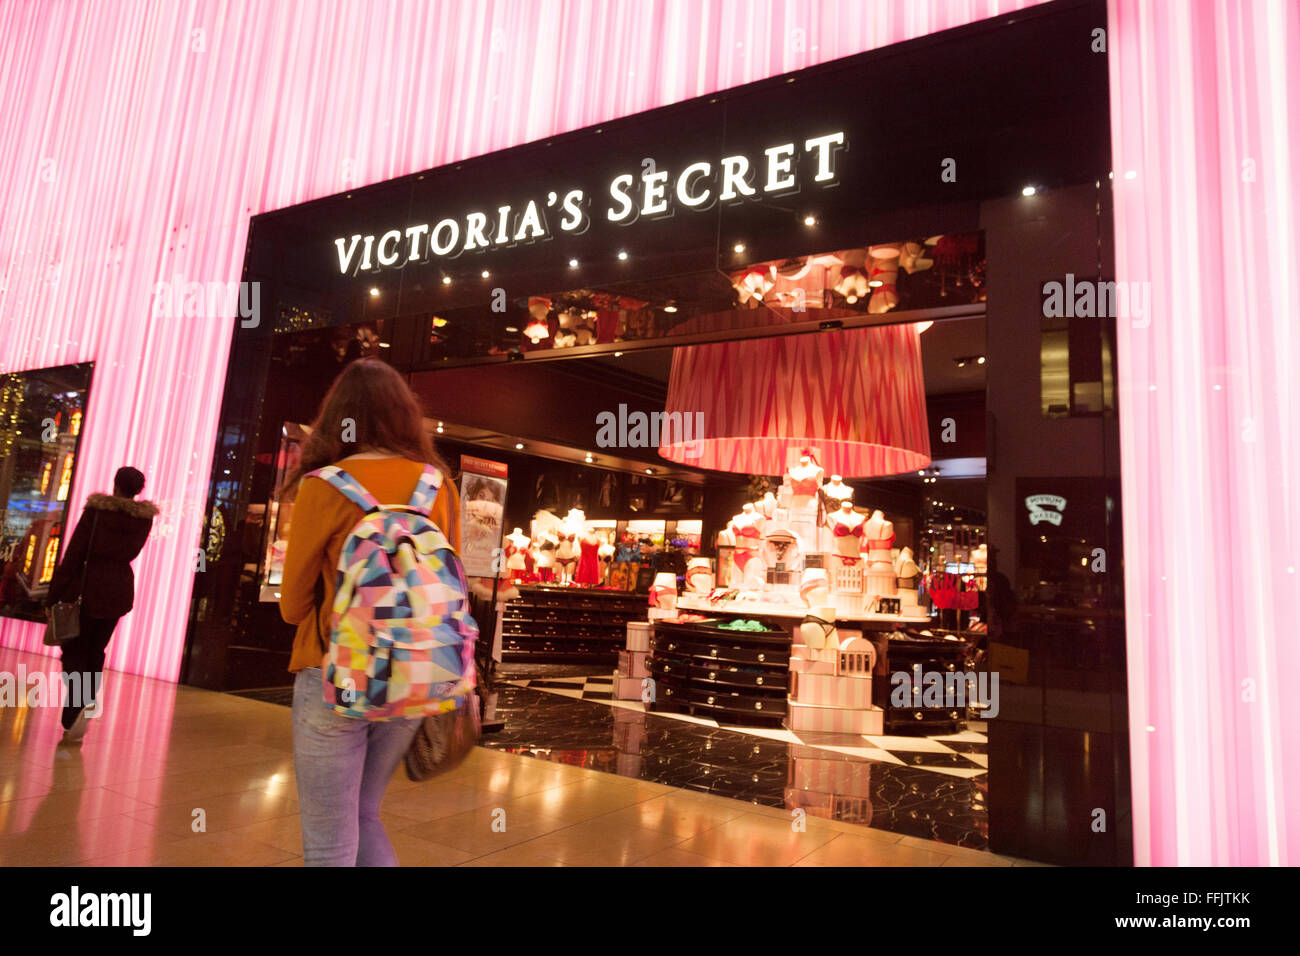 Victoria's secret shop hi-res stock photography and images - Alamy